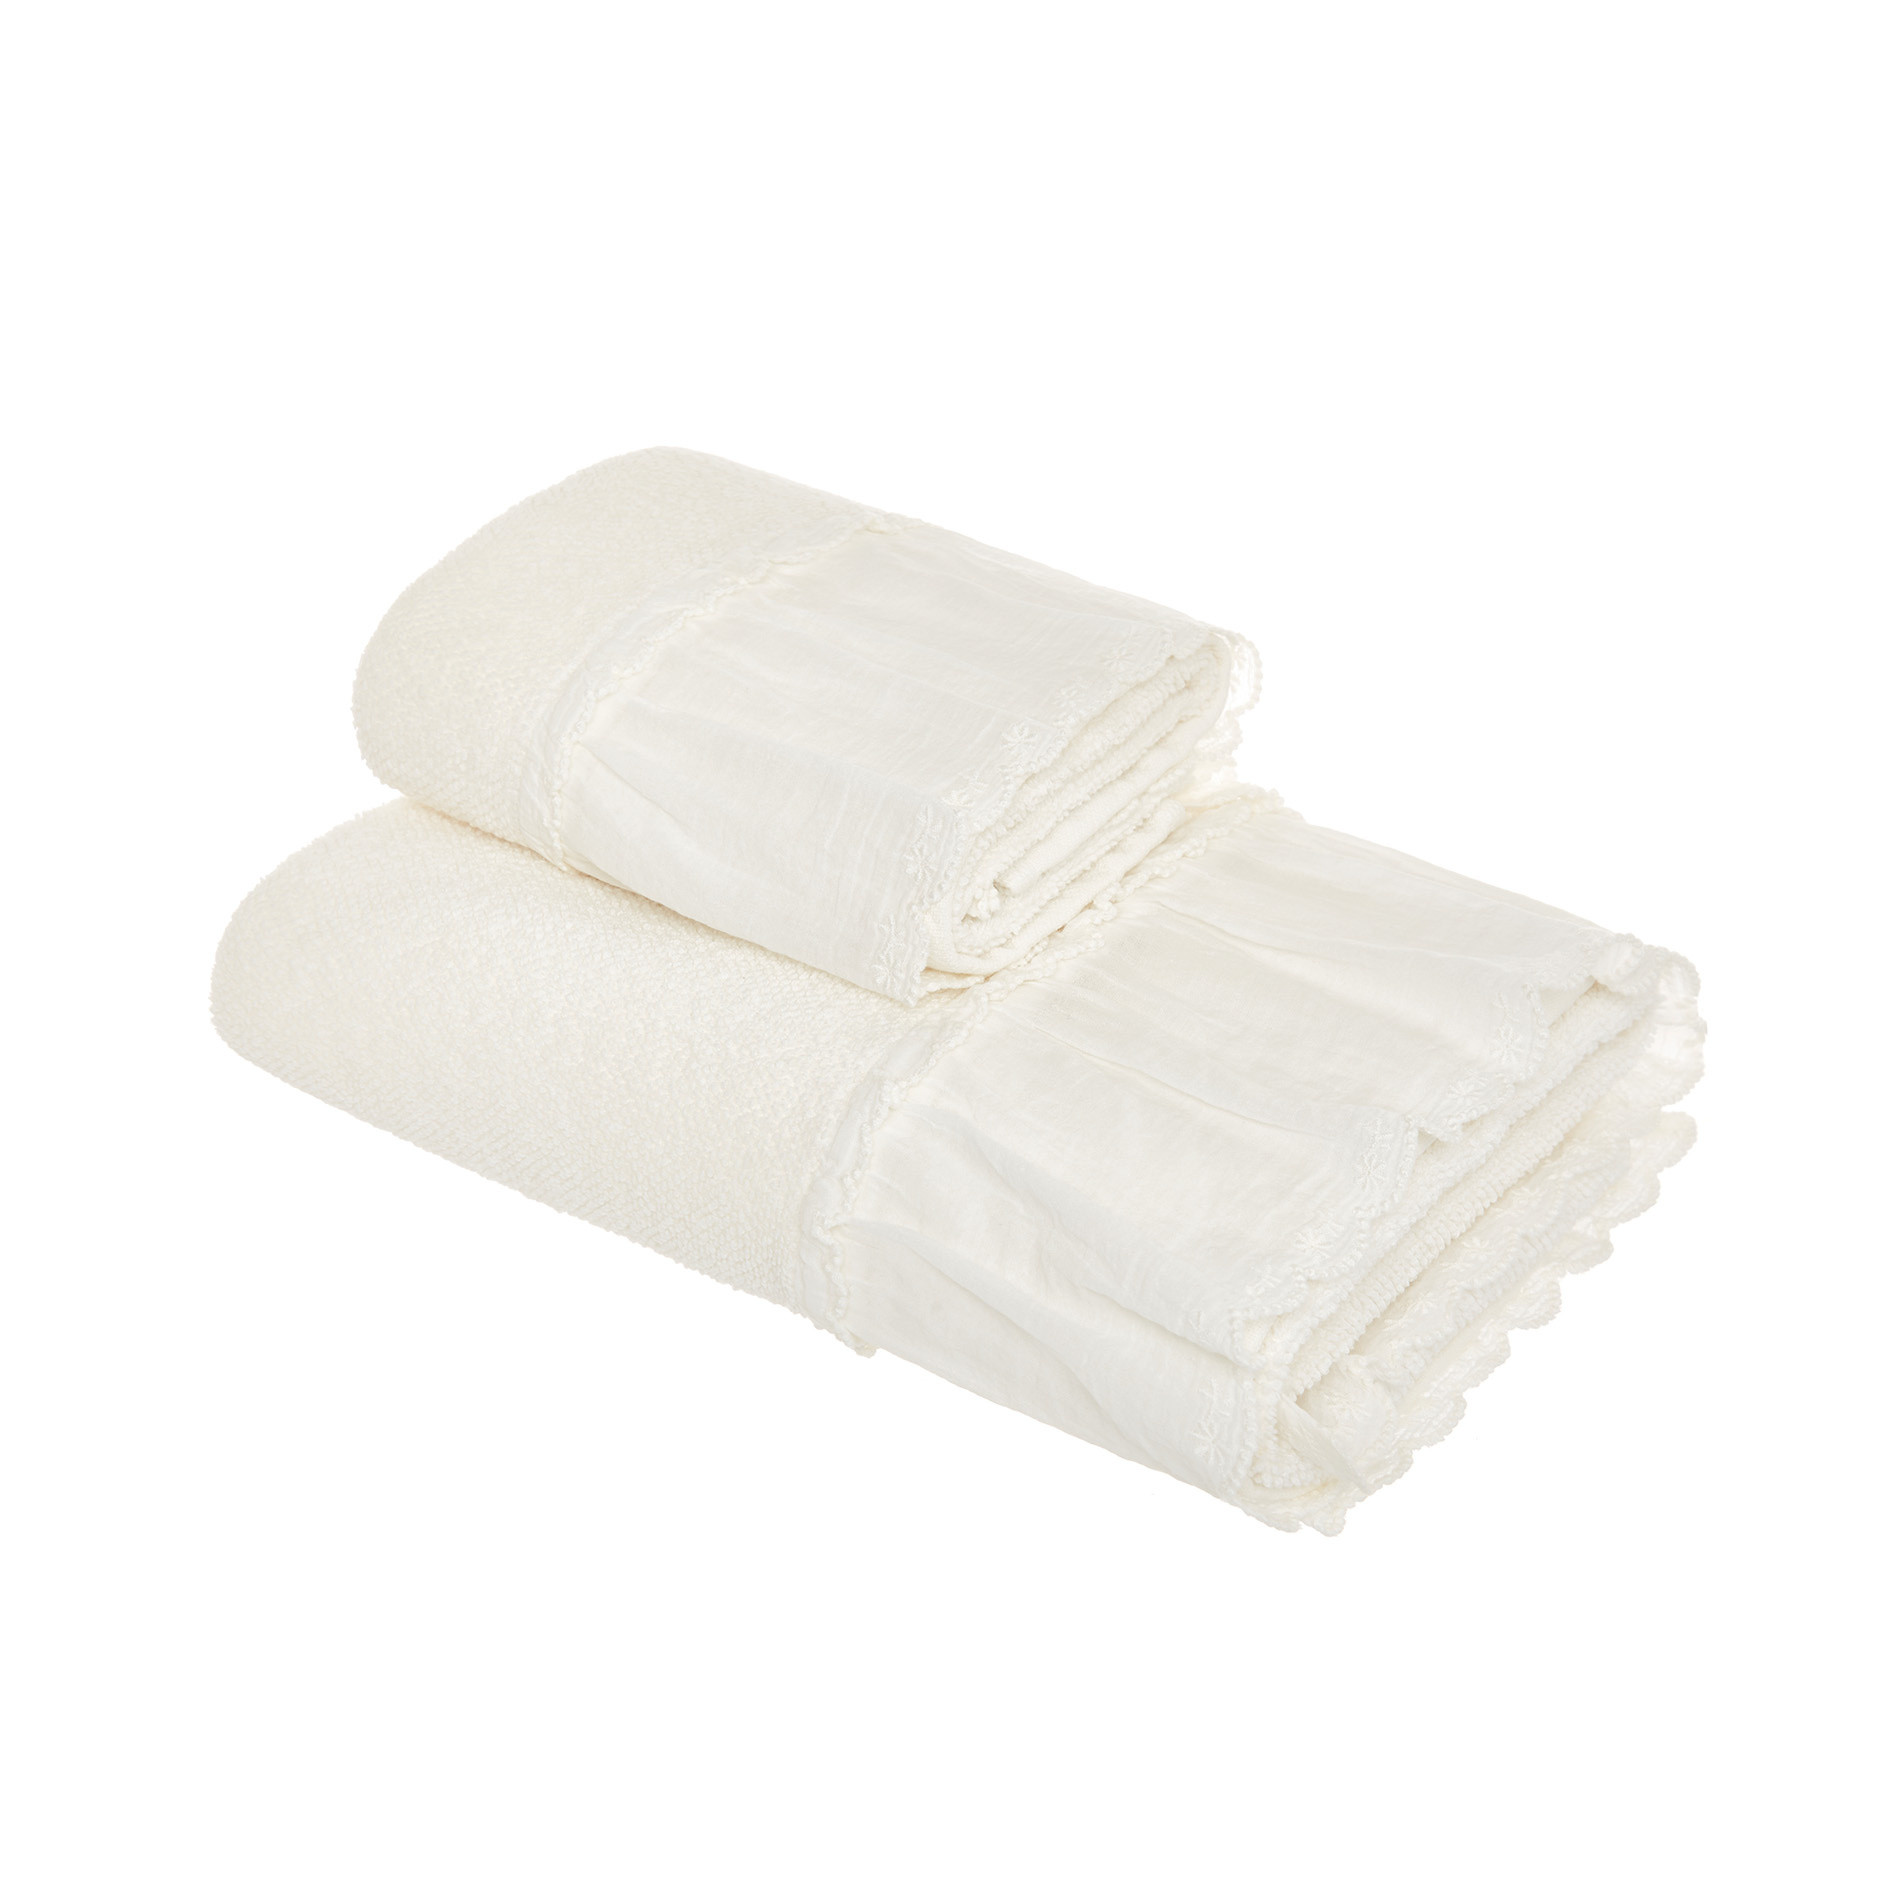 Portofino cotton towel with voile edge, White Cream, large image number 0